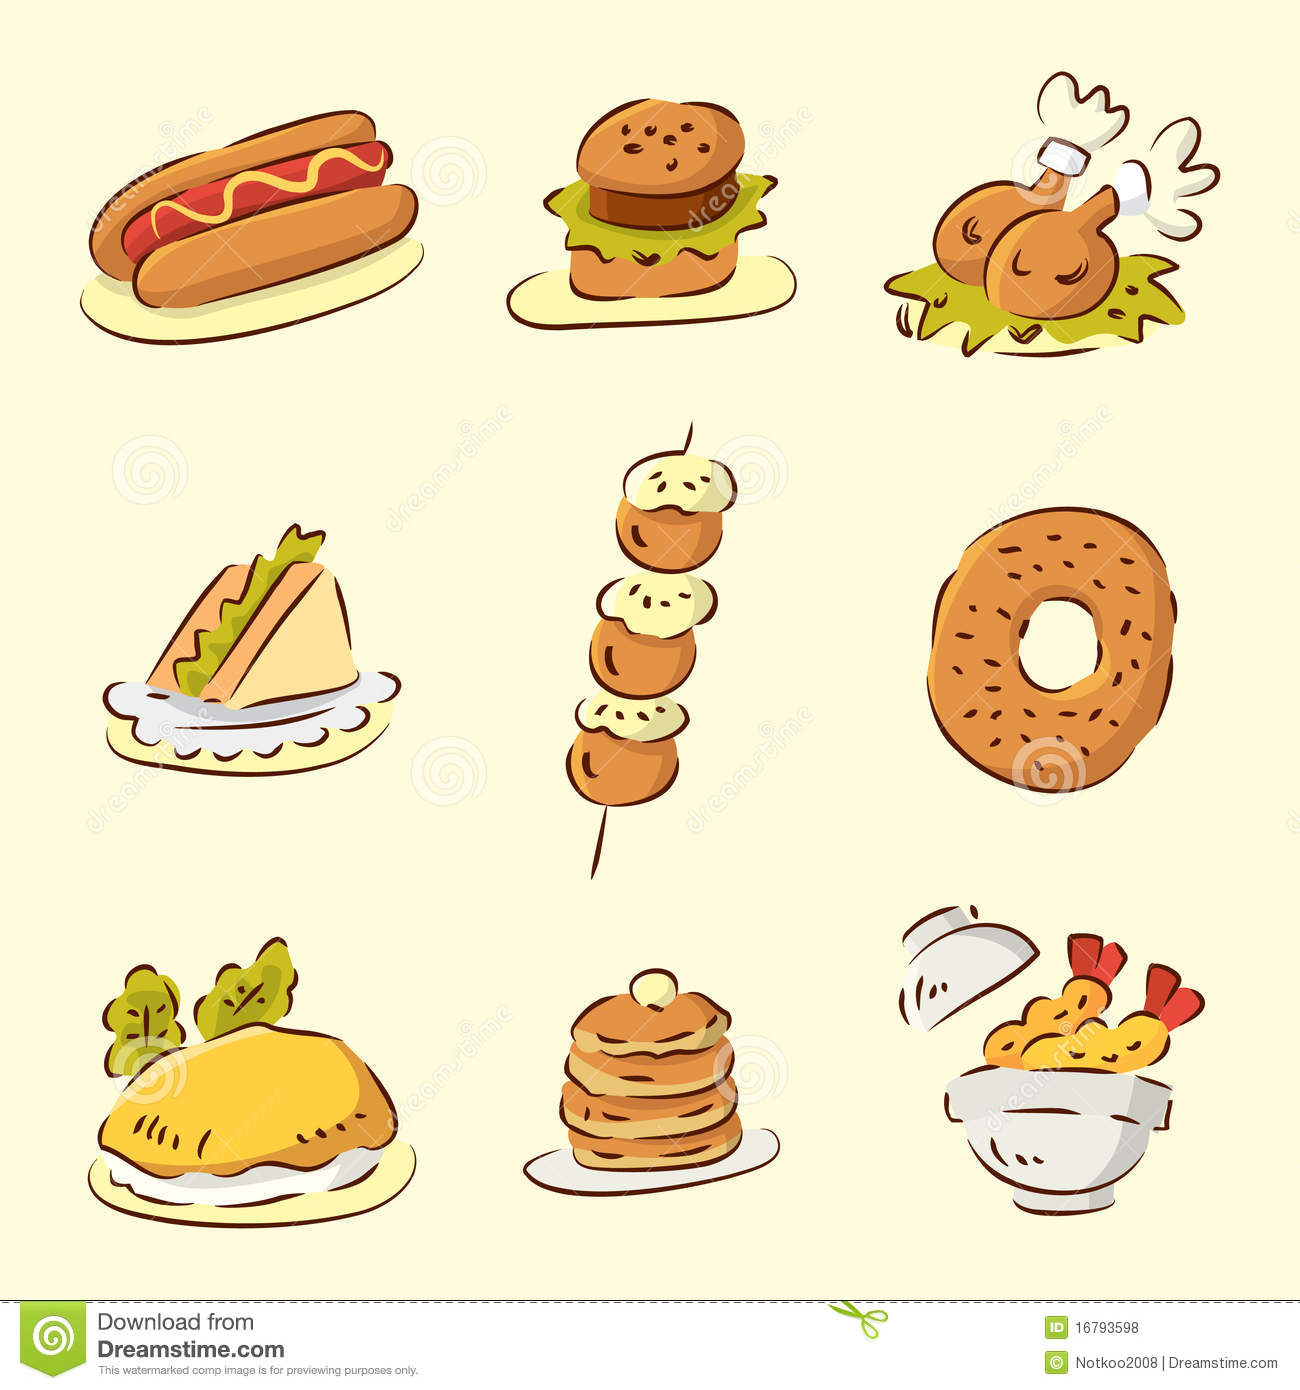 Food Cartoon Pictures